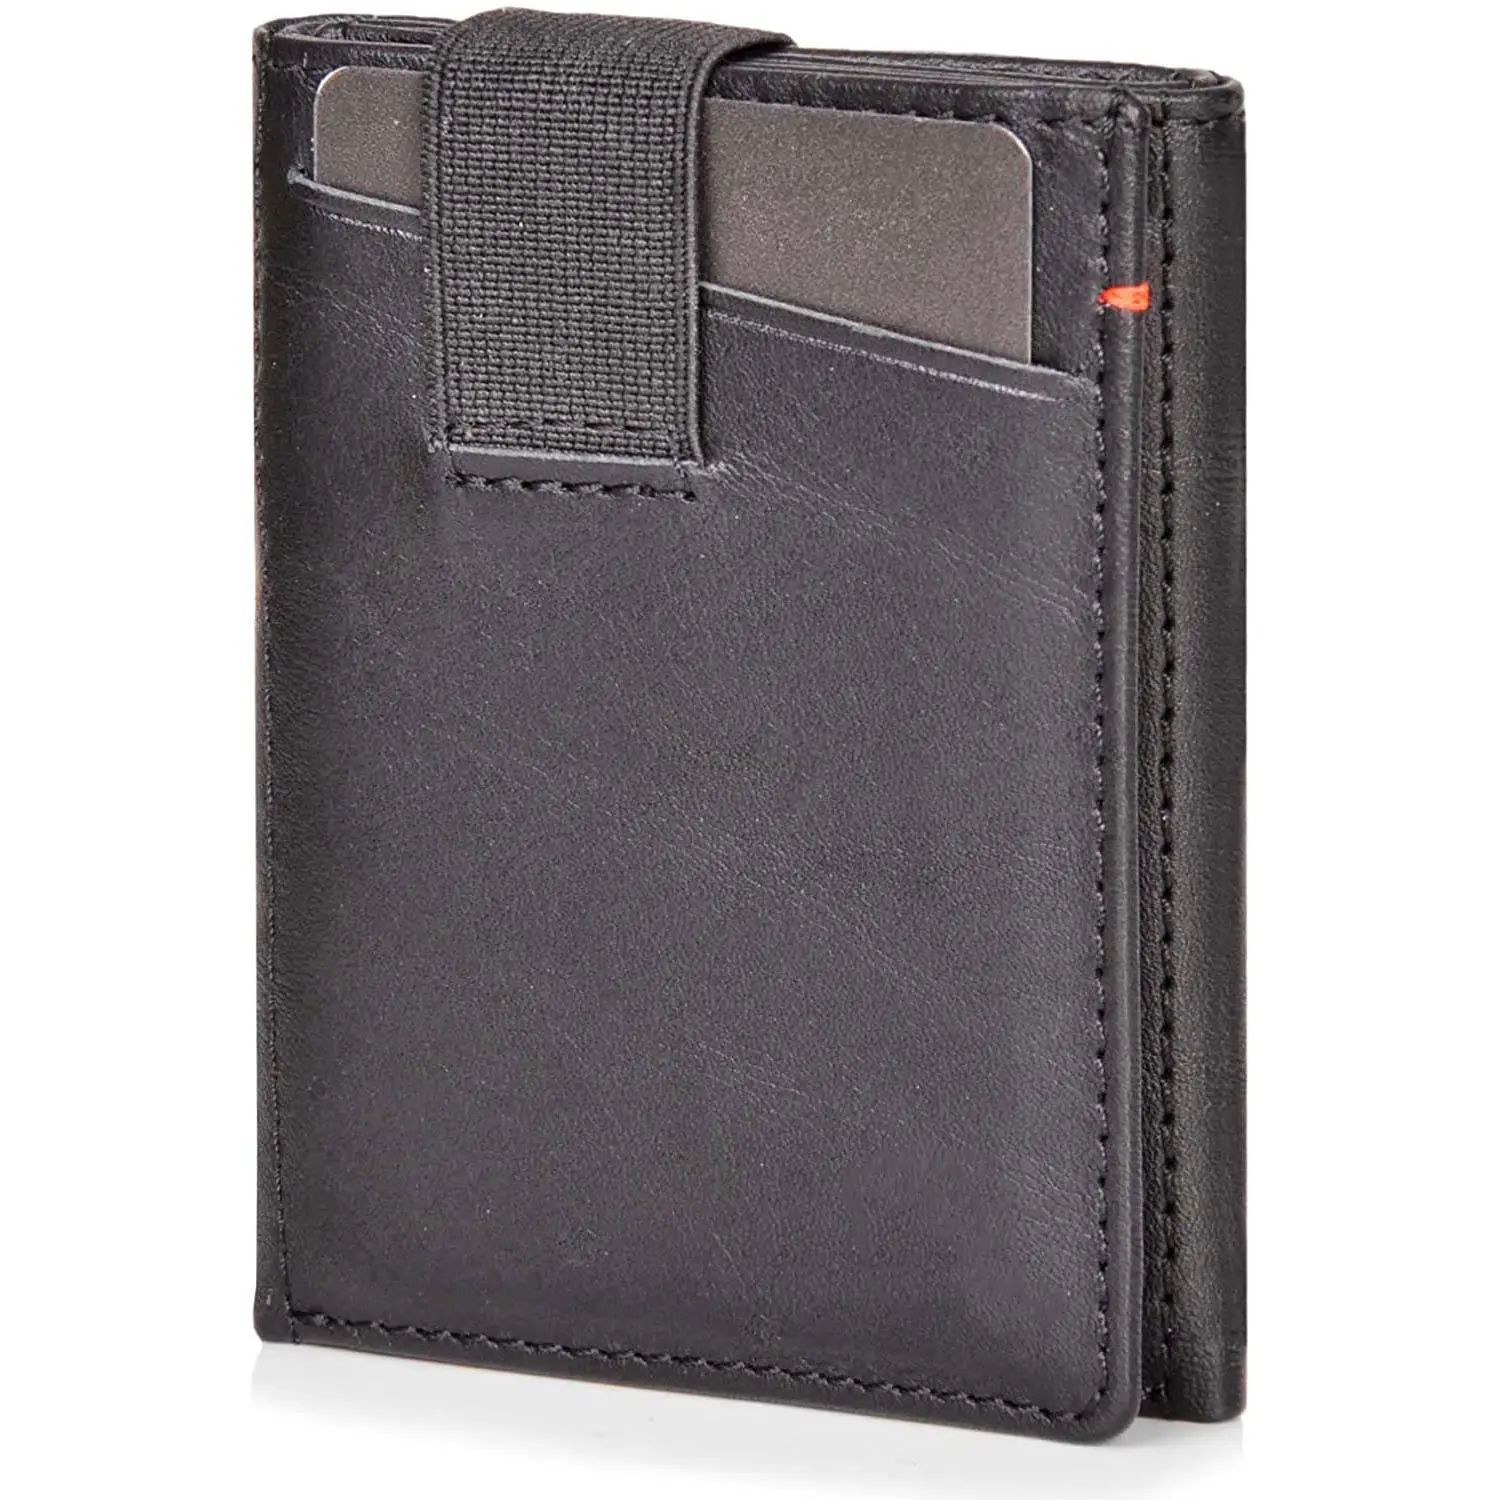 Best-Selling Mini Slim Magic Wallet Money Clip Travel Wallet RFID Leather Credit Card Holder For Men